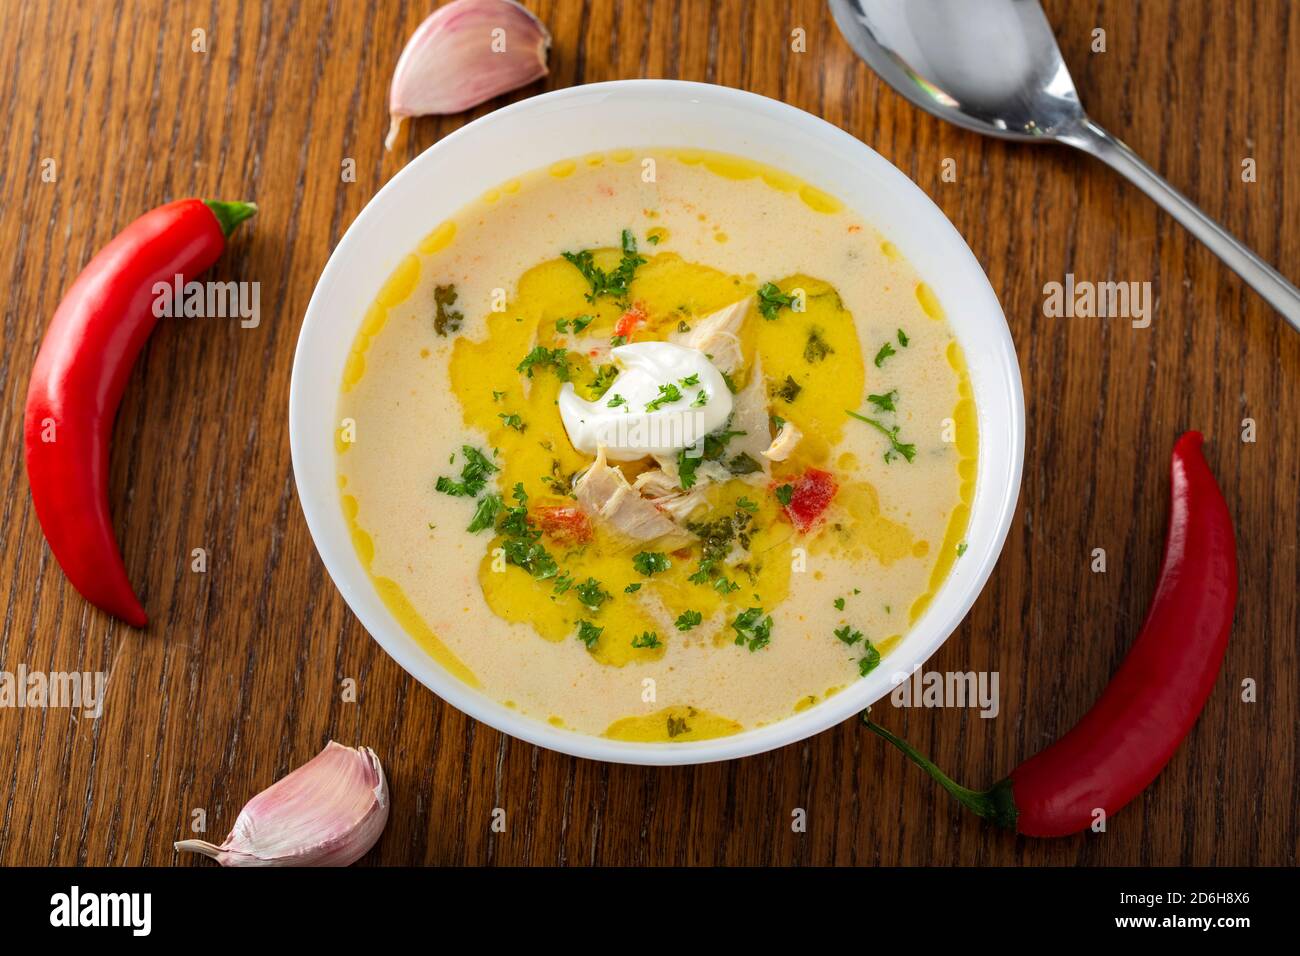 Ciorba Radauteana - Romanian traditional chicken soup with cream - top view Stock Photo